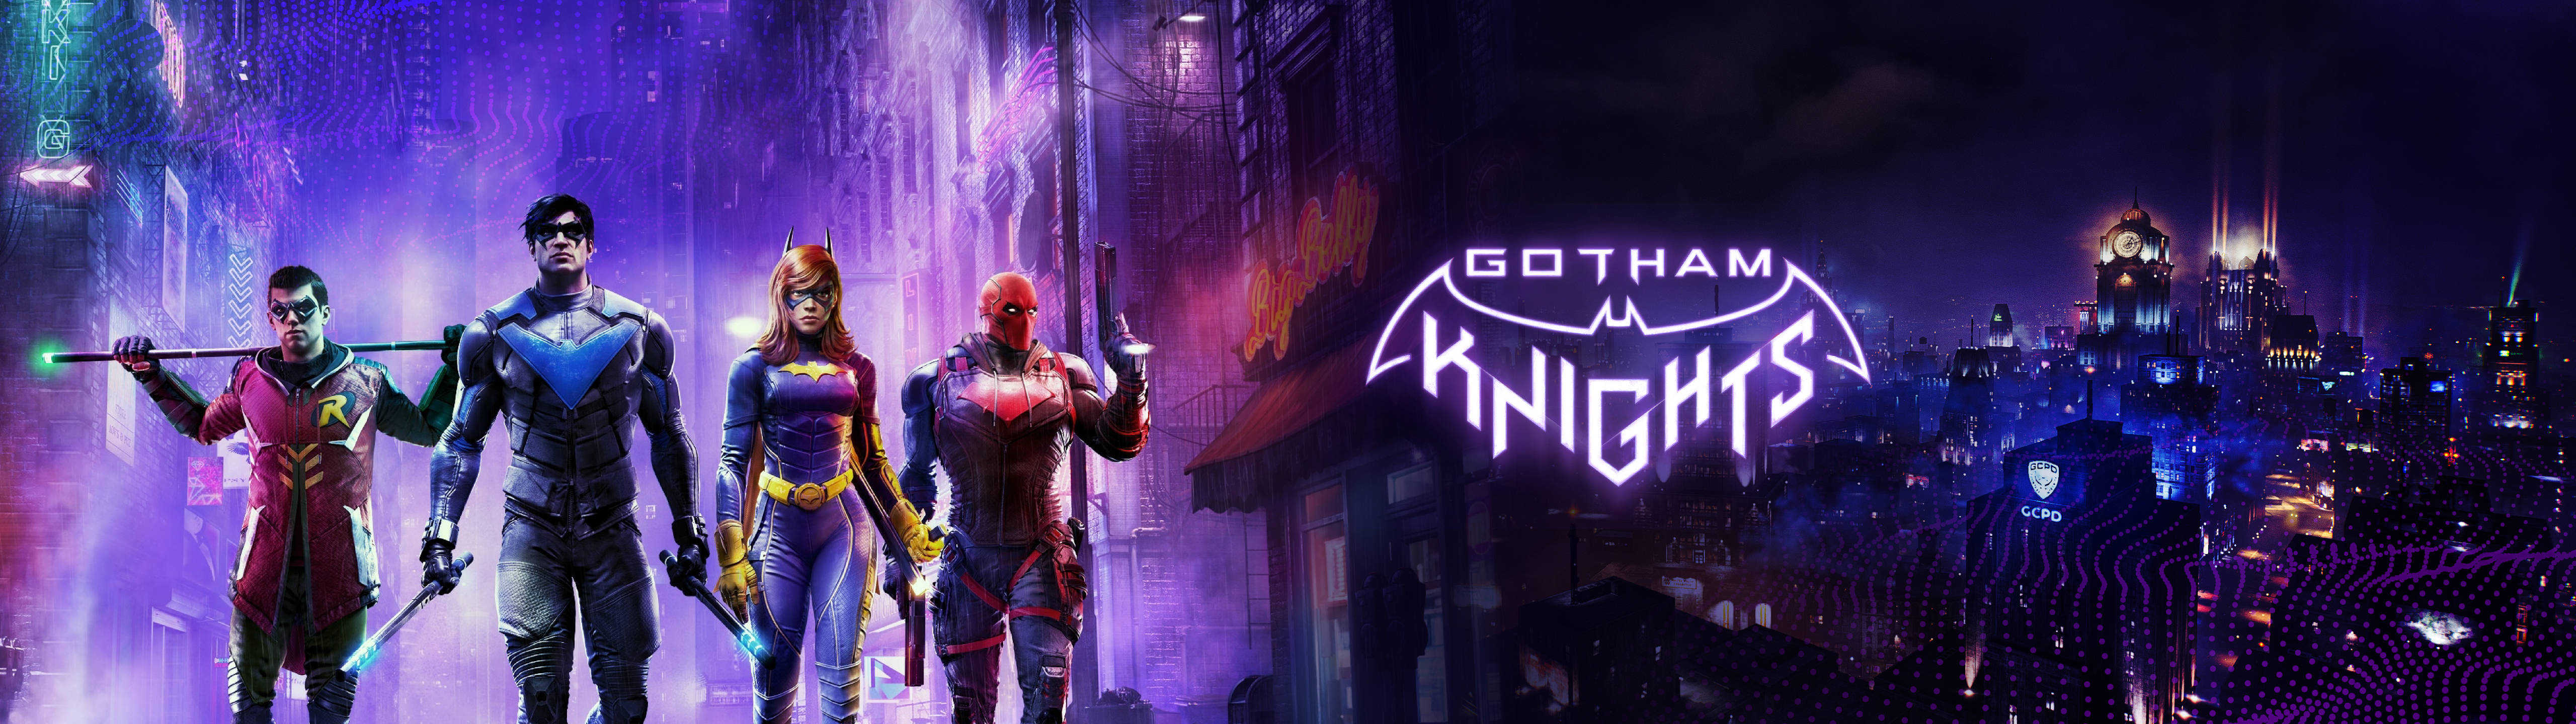 Gotham Knights Crew 5120x1440 Gaming Background